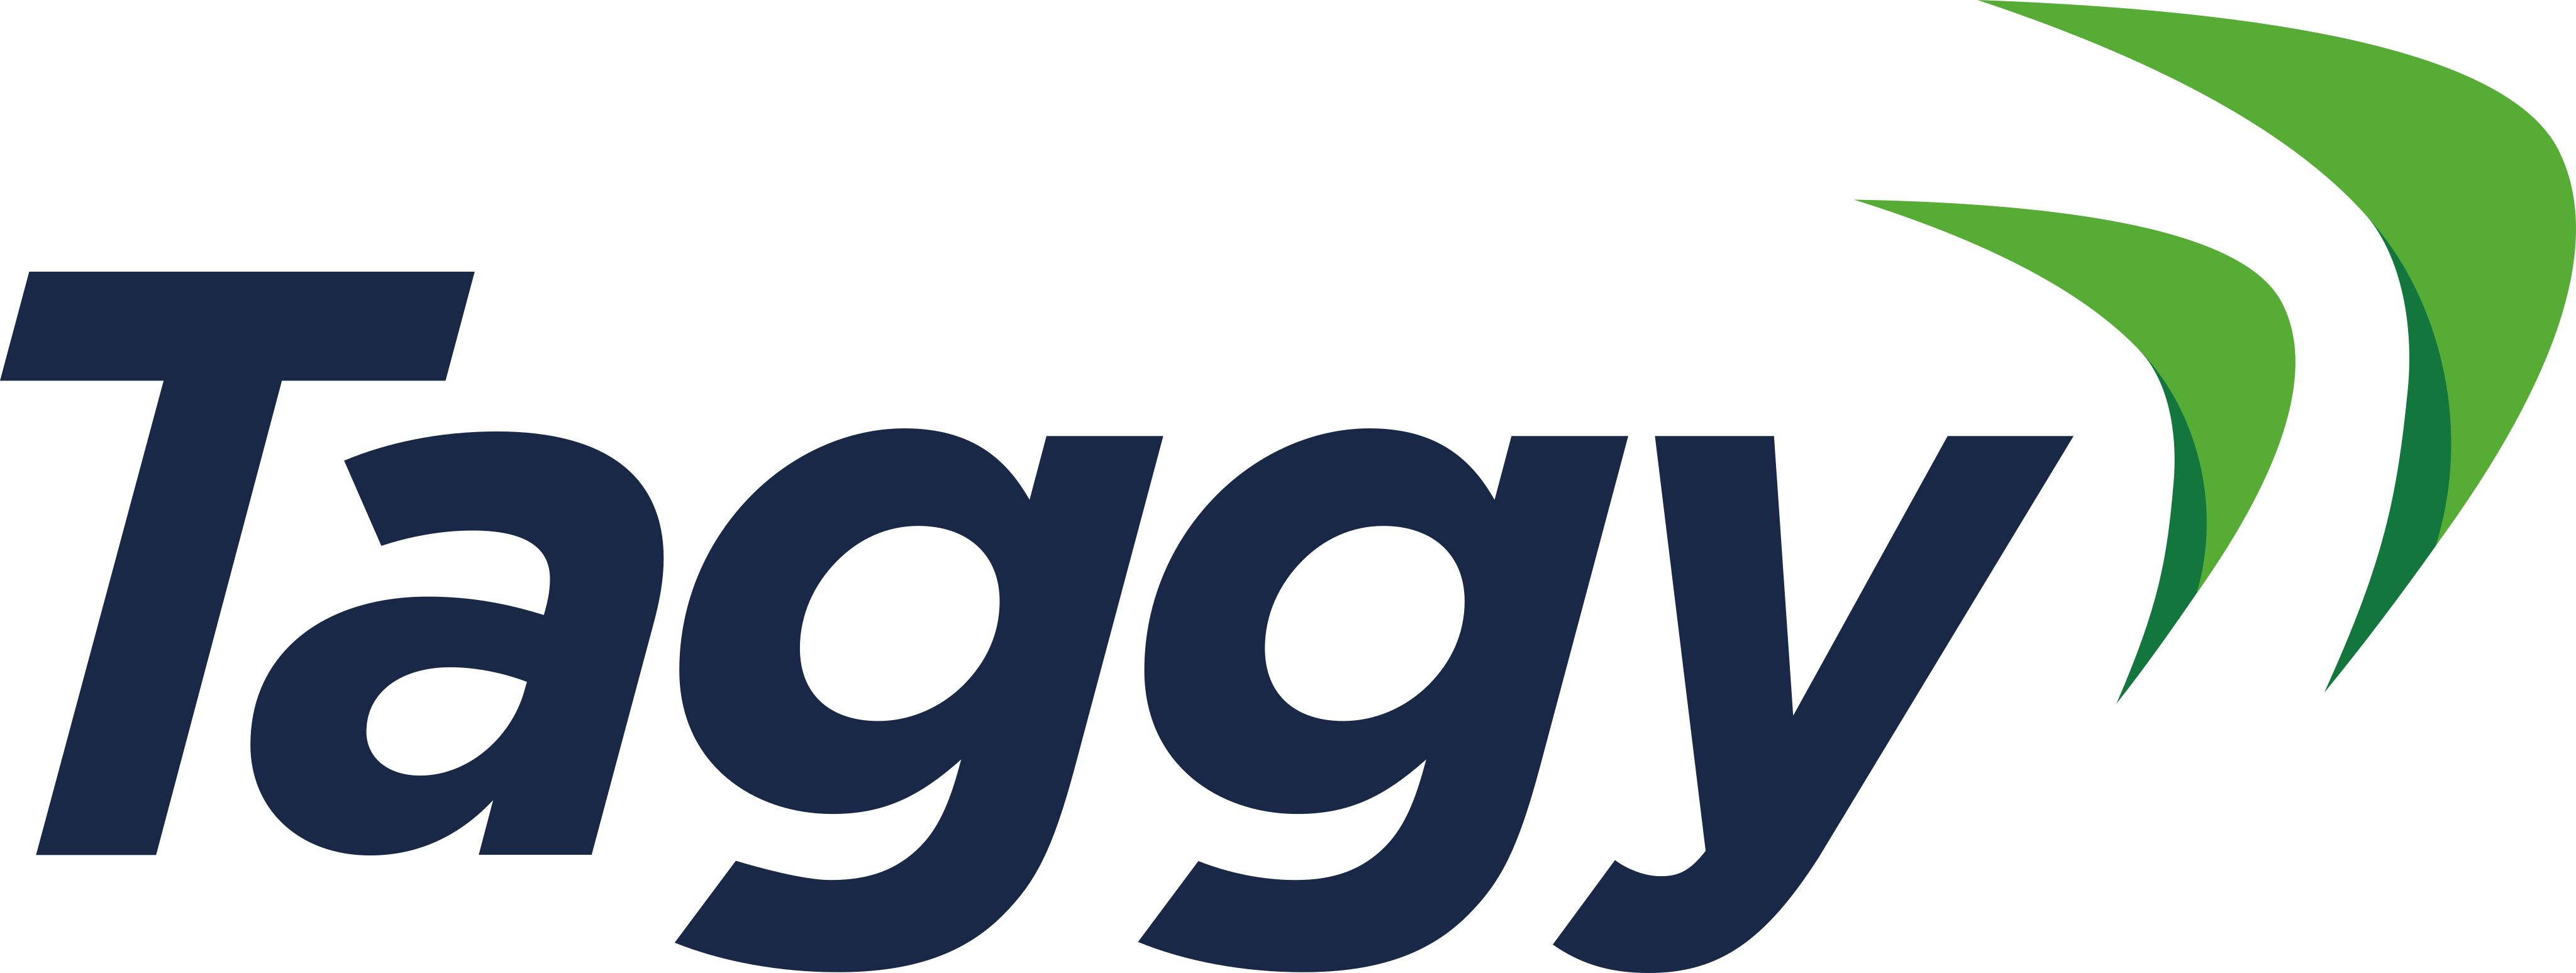 taggy logo - Taggy Logo